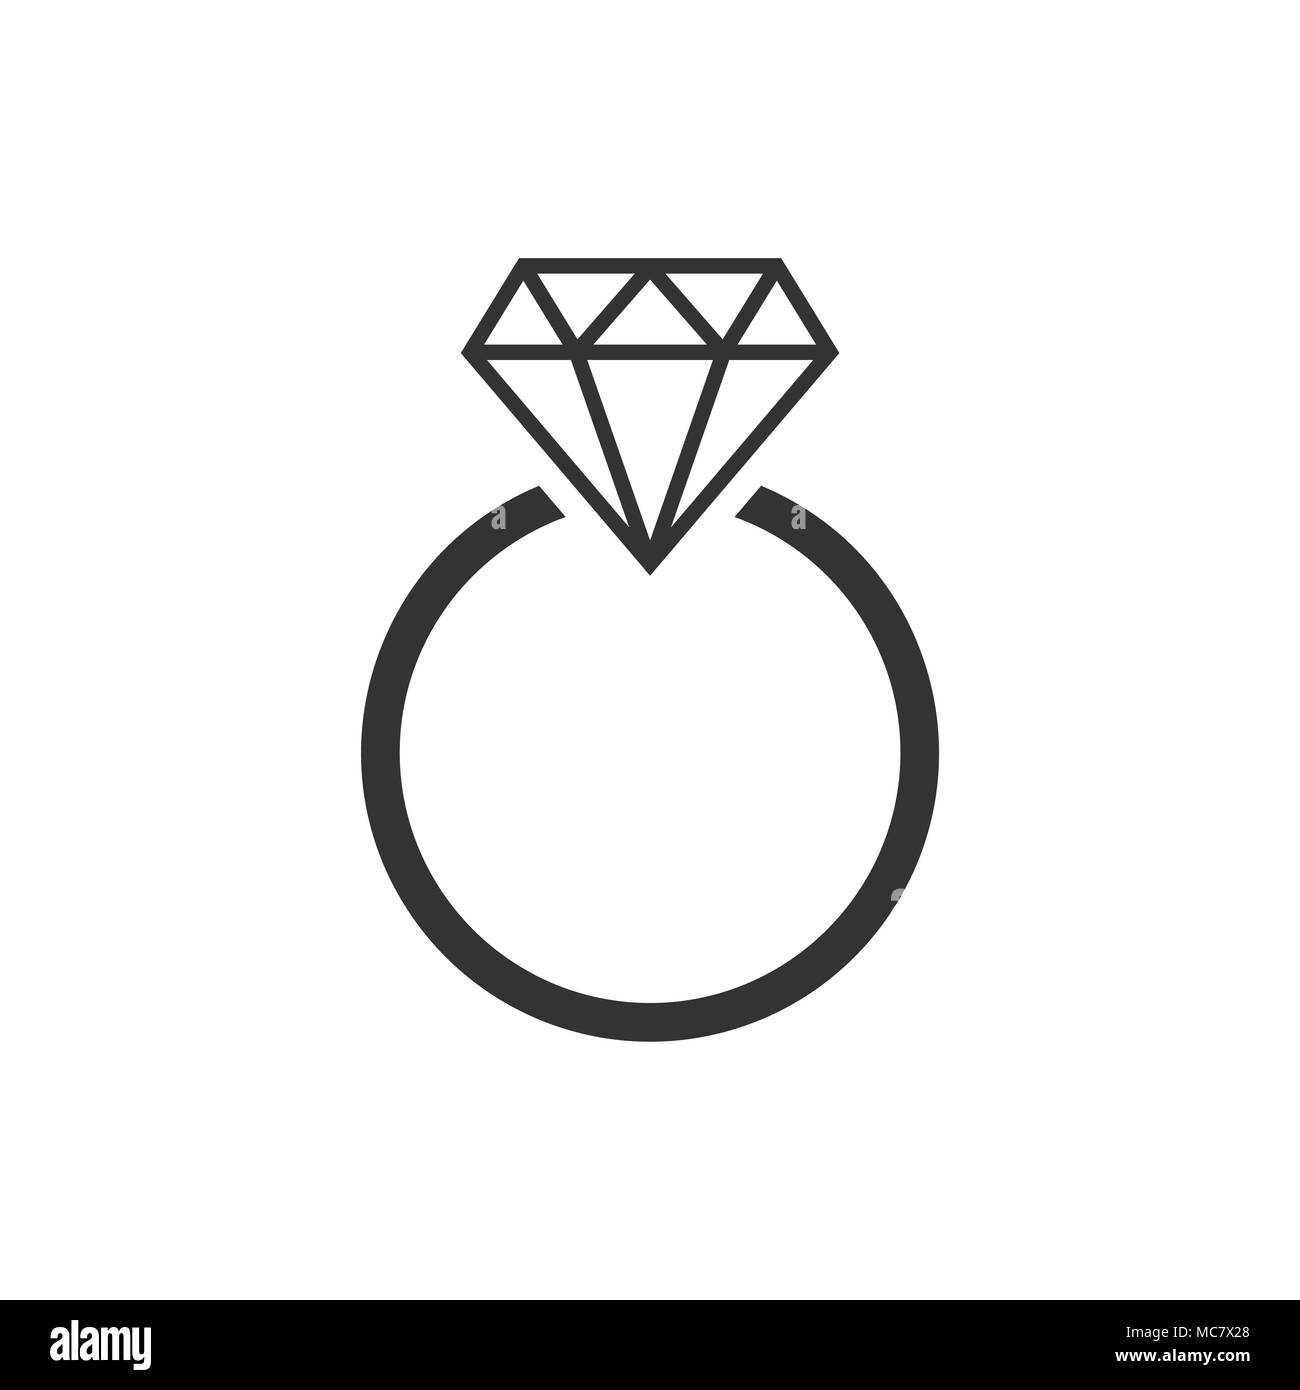 Gold Wedding Diamond Ring Set On Stock Illustration 15305215 | Shutterstock